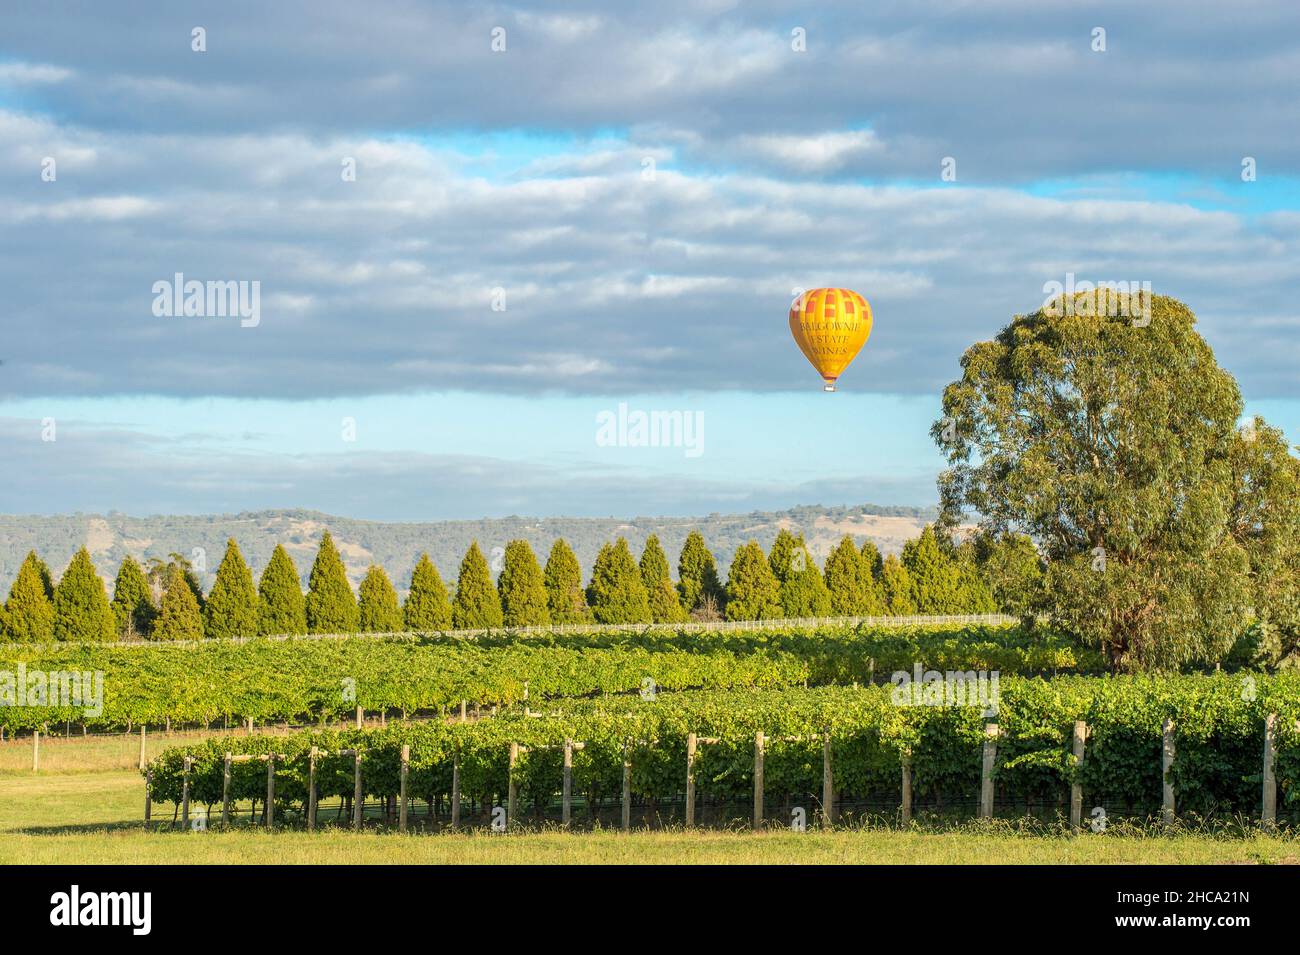 Vineyards in Yarra Valley, Victoria. Yarra Valley is one of Australia’s premium wine growing regions. Stock Photo